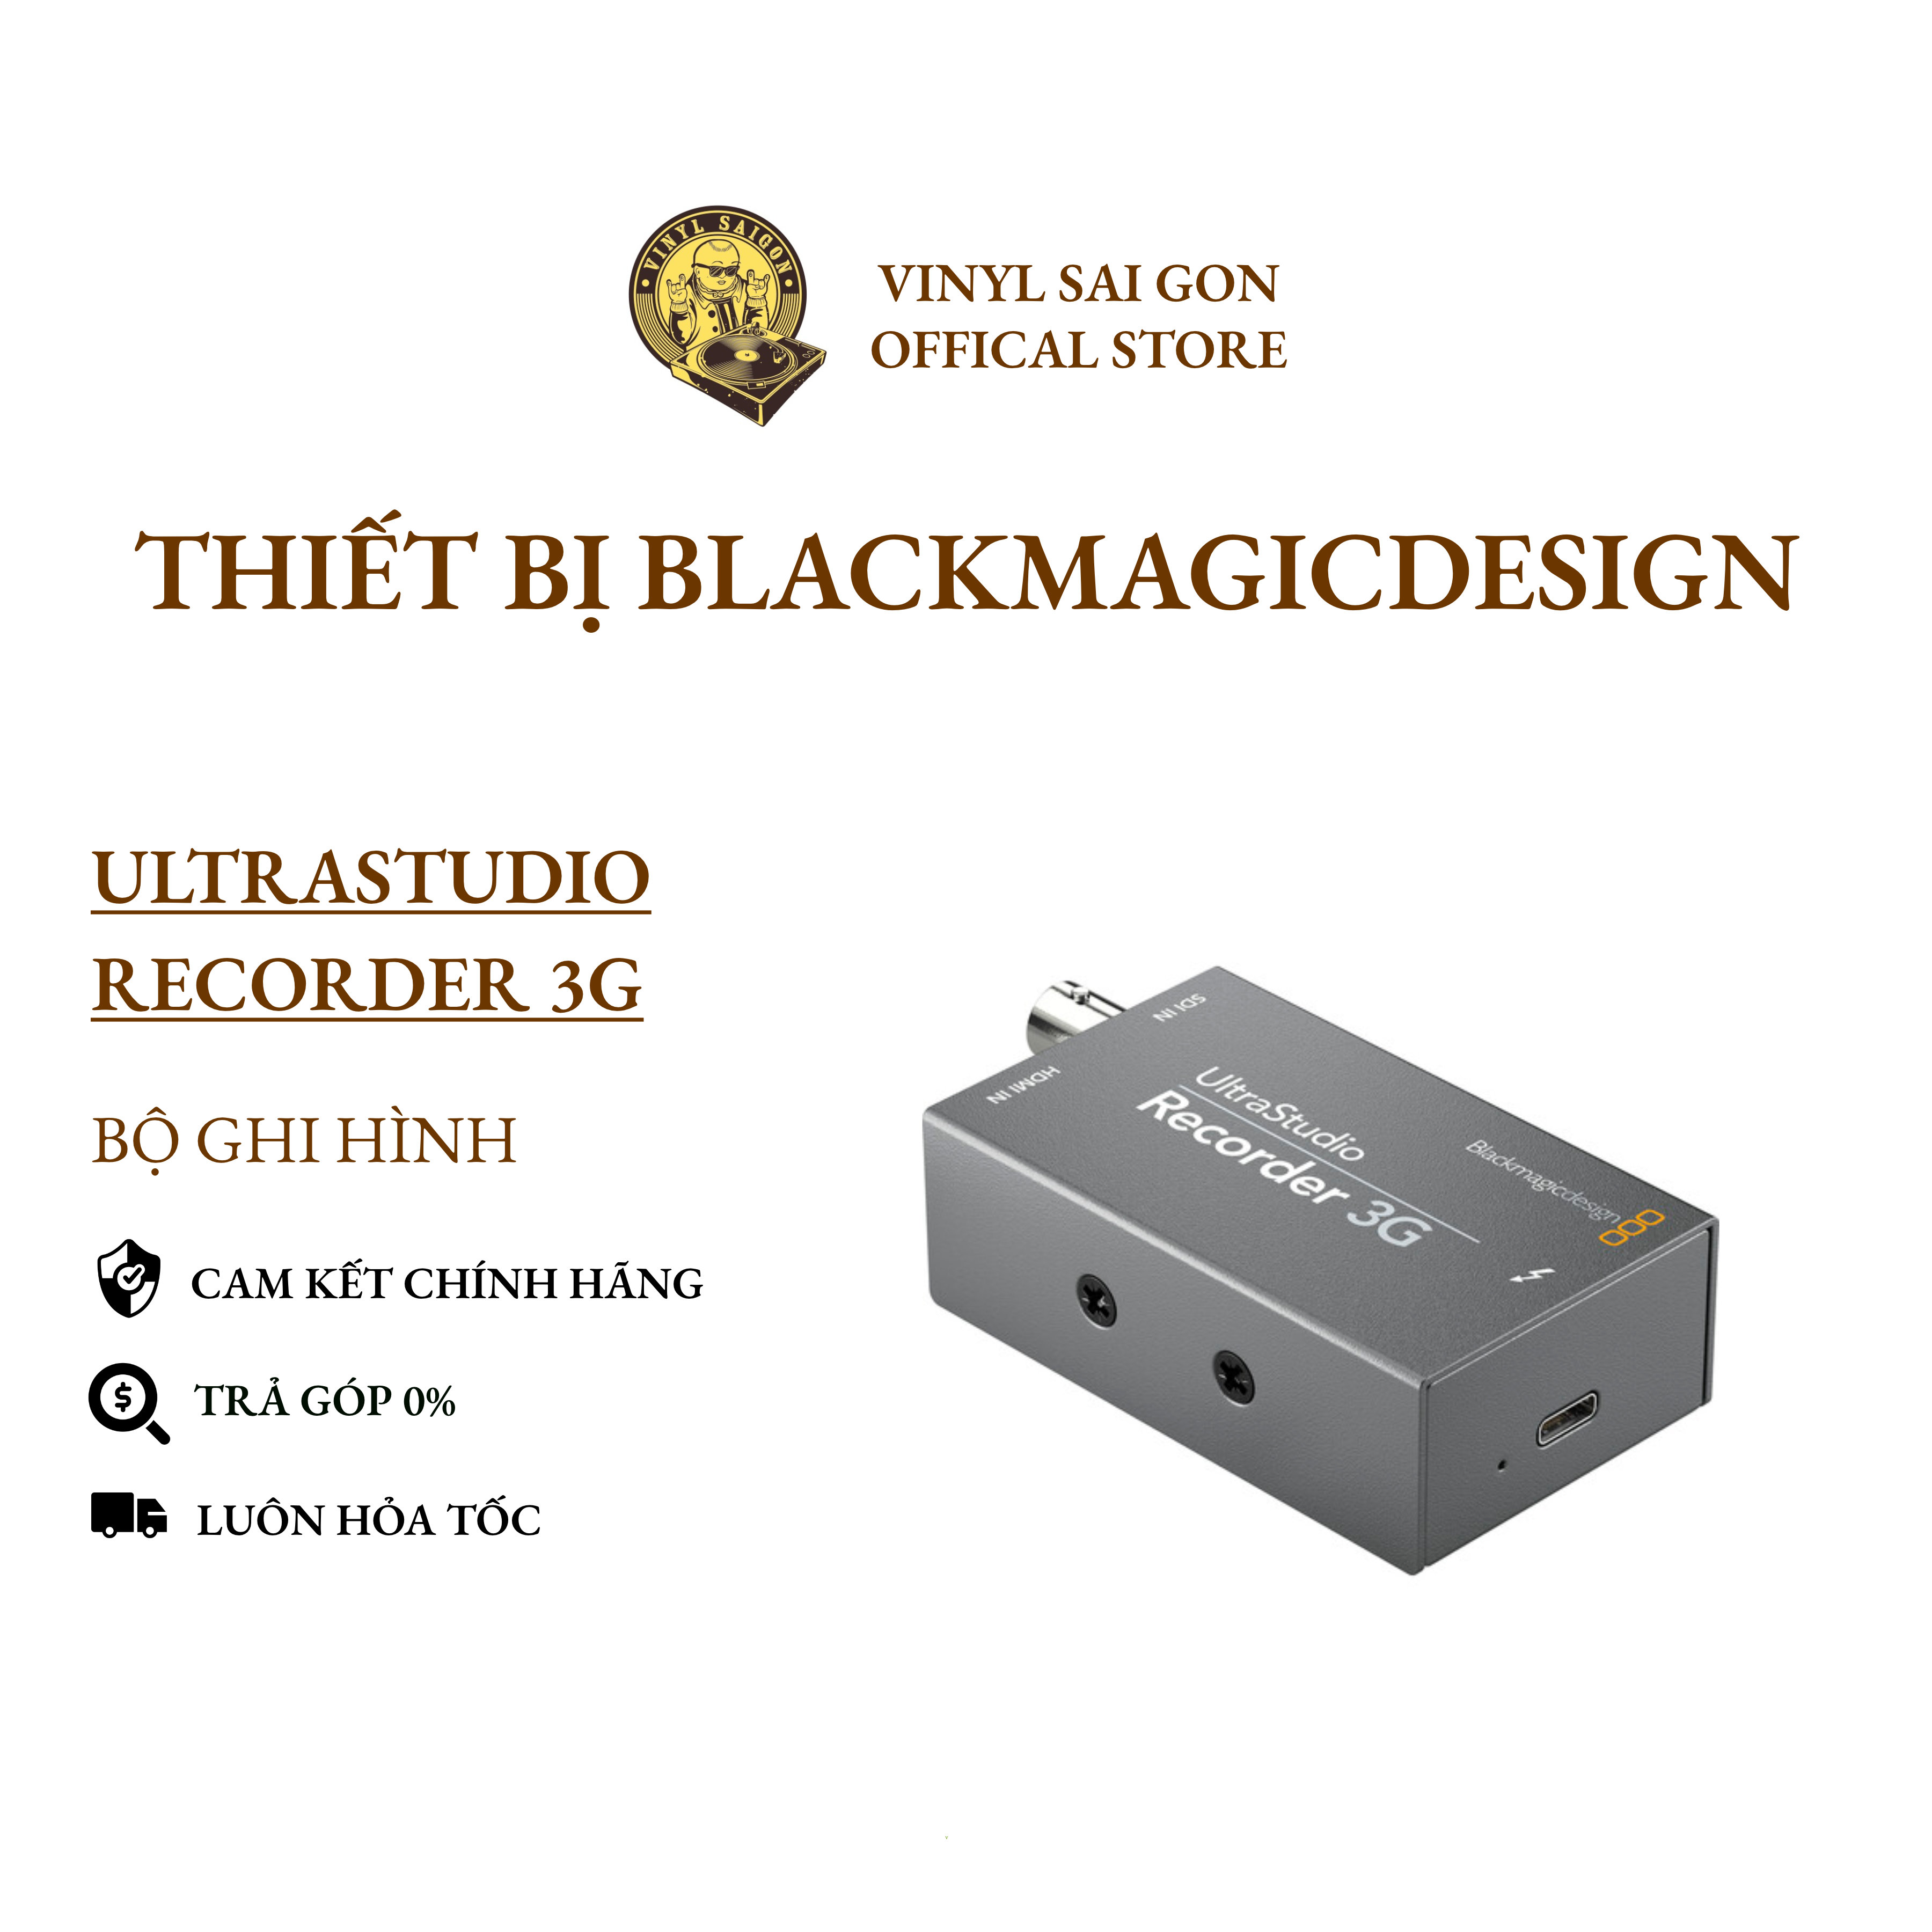 Bộ Ghi Hình Blackmagicdesign UltraStudio Recorder 3G